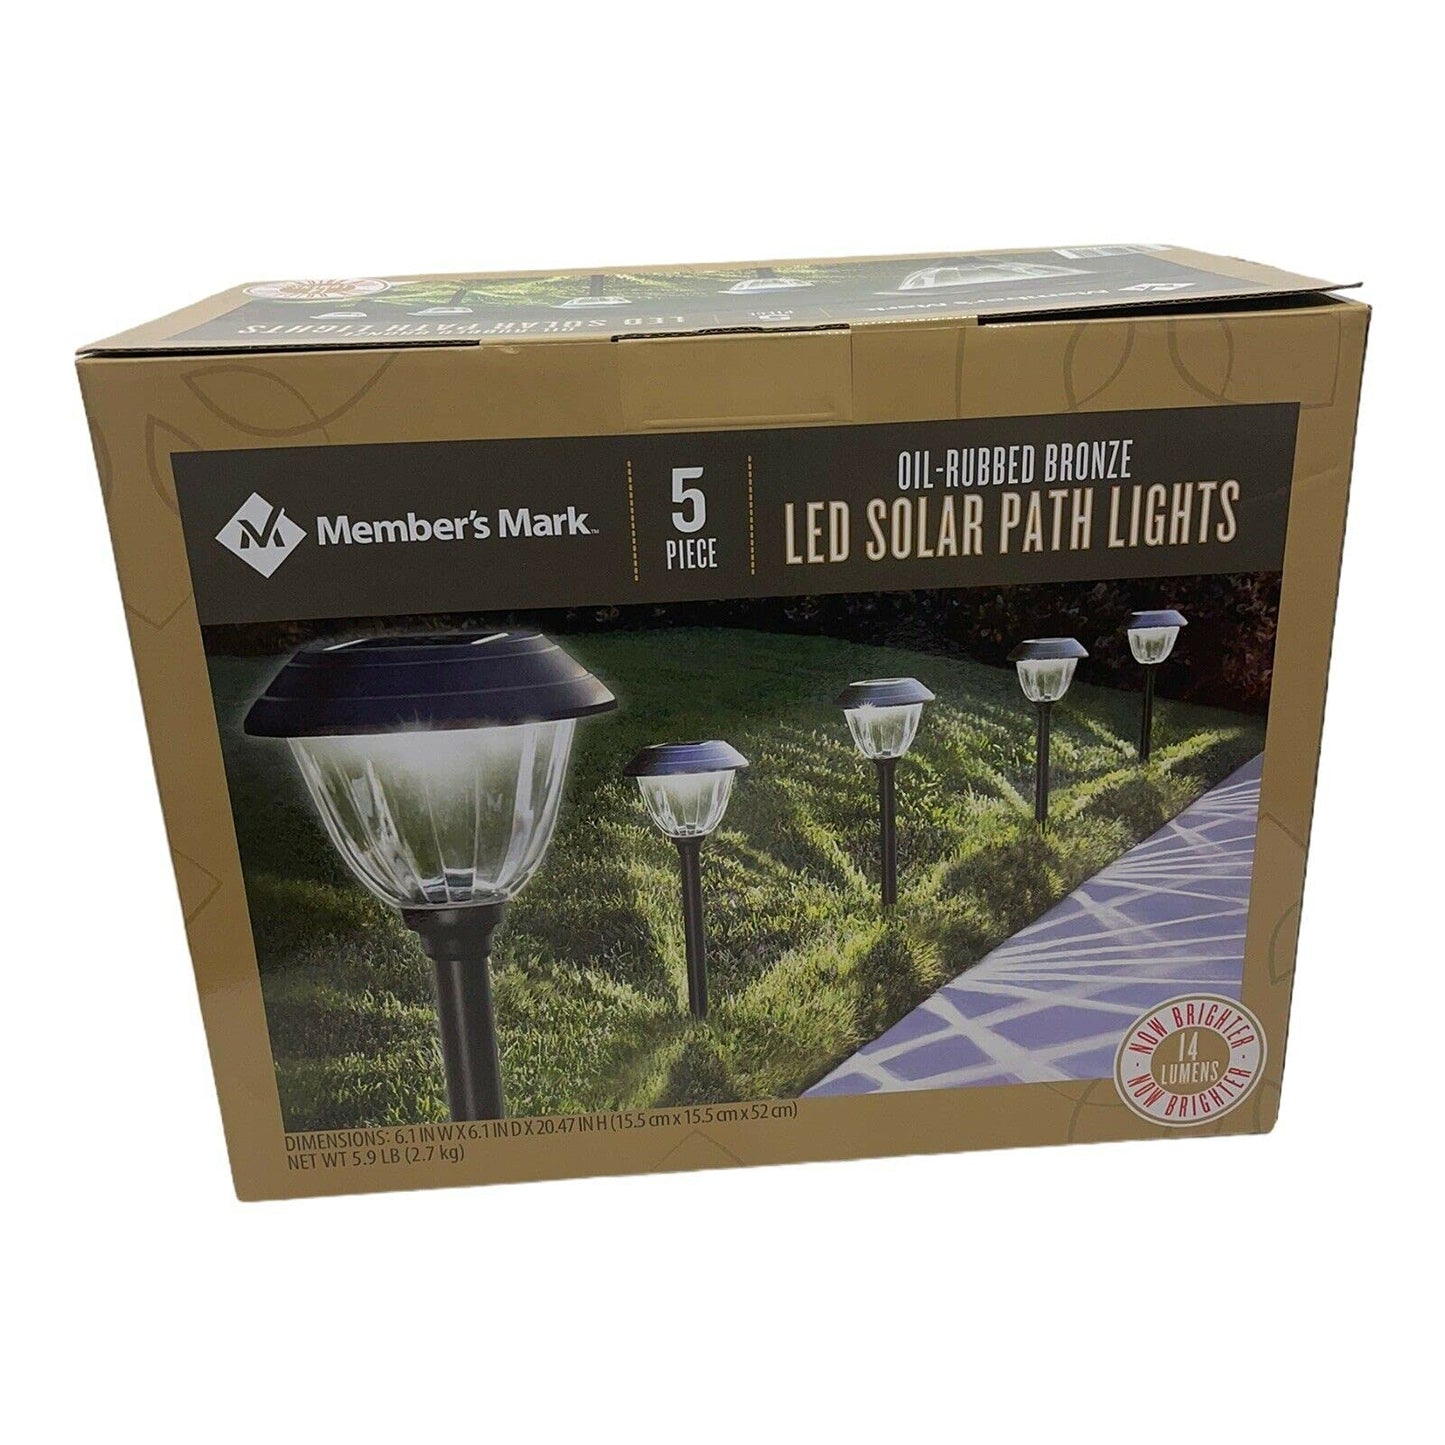 Member's Mark Oil-Rubbed Bronze LED Solar 14 Lumen Path Lights (5 Count)